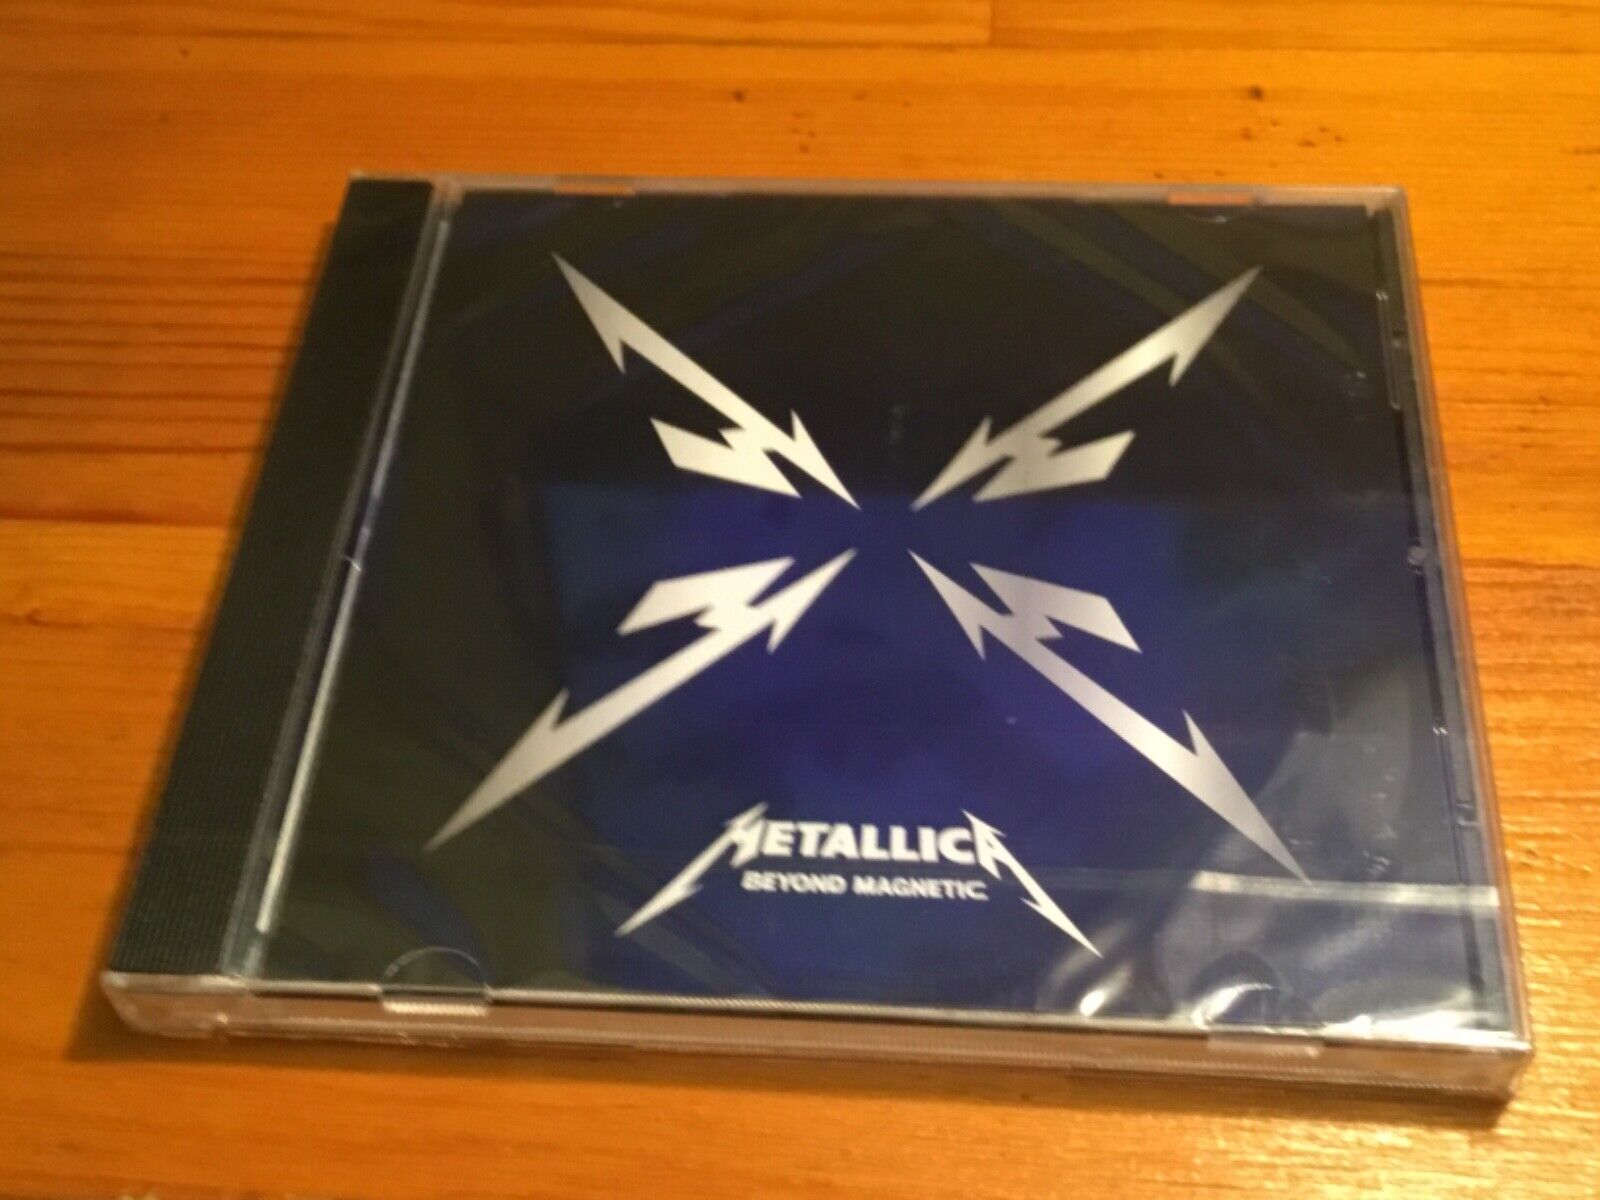 ***METALLICA*** “Beyond Magnetic” 2012 UK Import Vertigo **SEALED** 4-Song EP CD